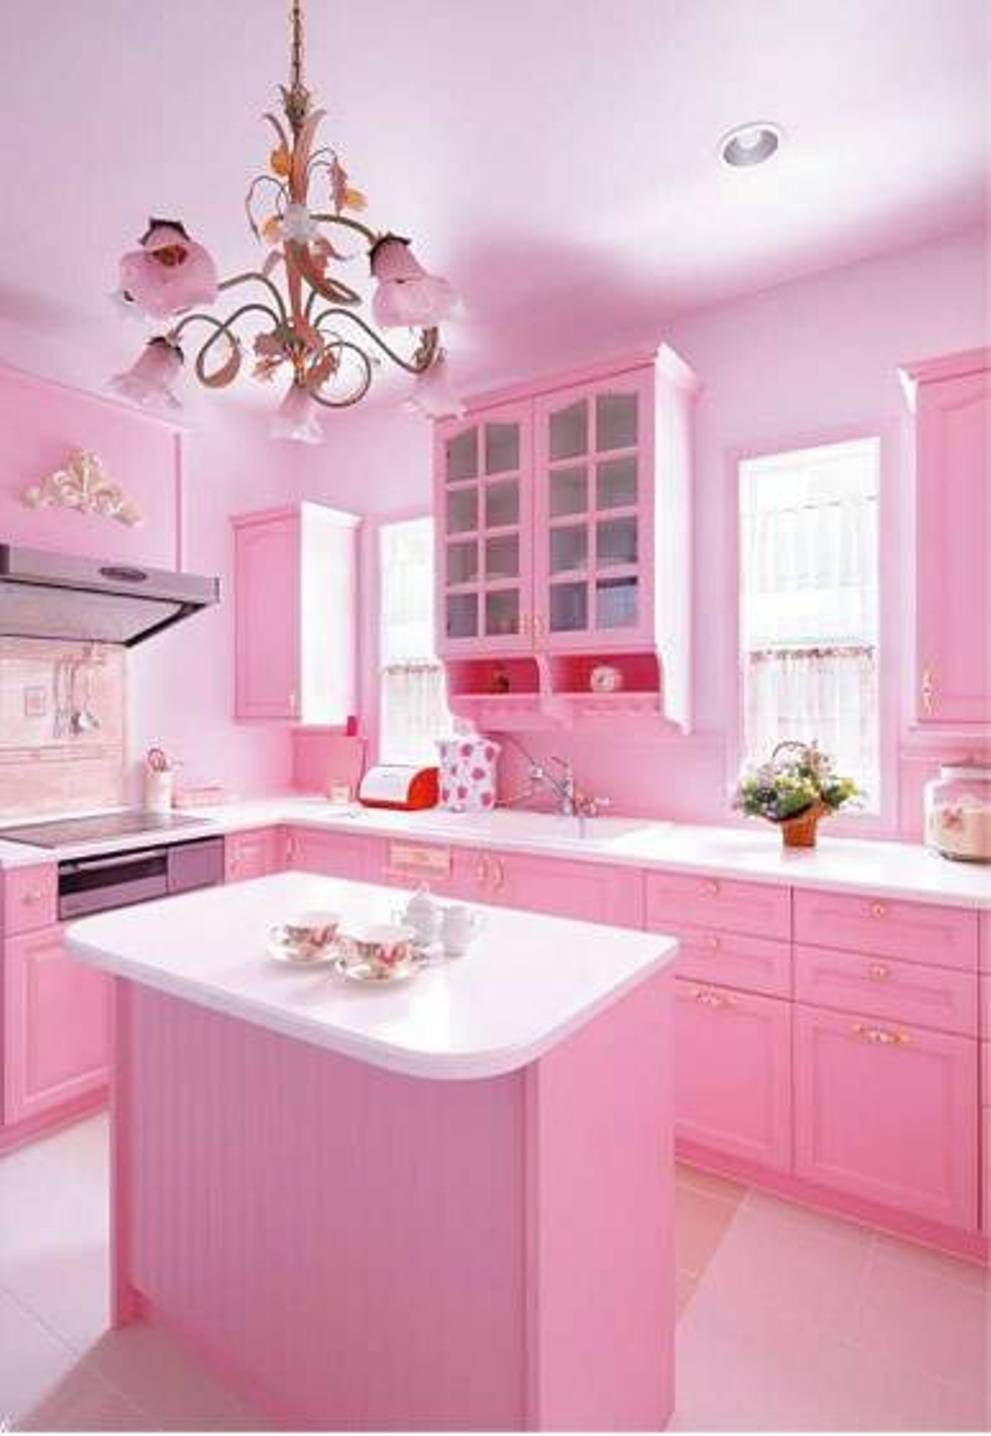 Best ideas about Pink Kitchen Decoration
. Save or Pin Pink Kitchen Decor Awesome and Best Home Decorating Now.